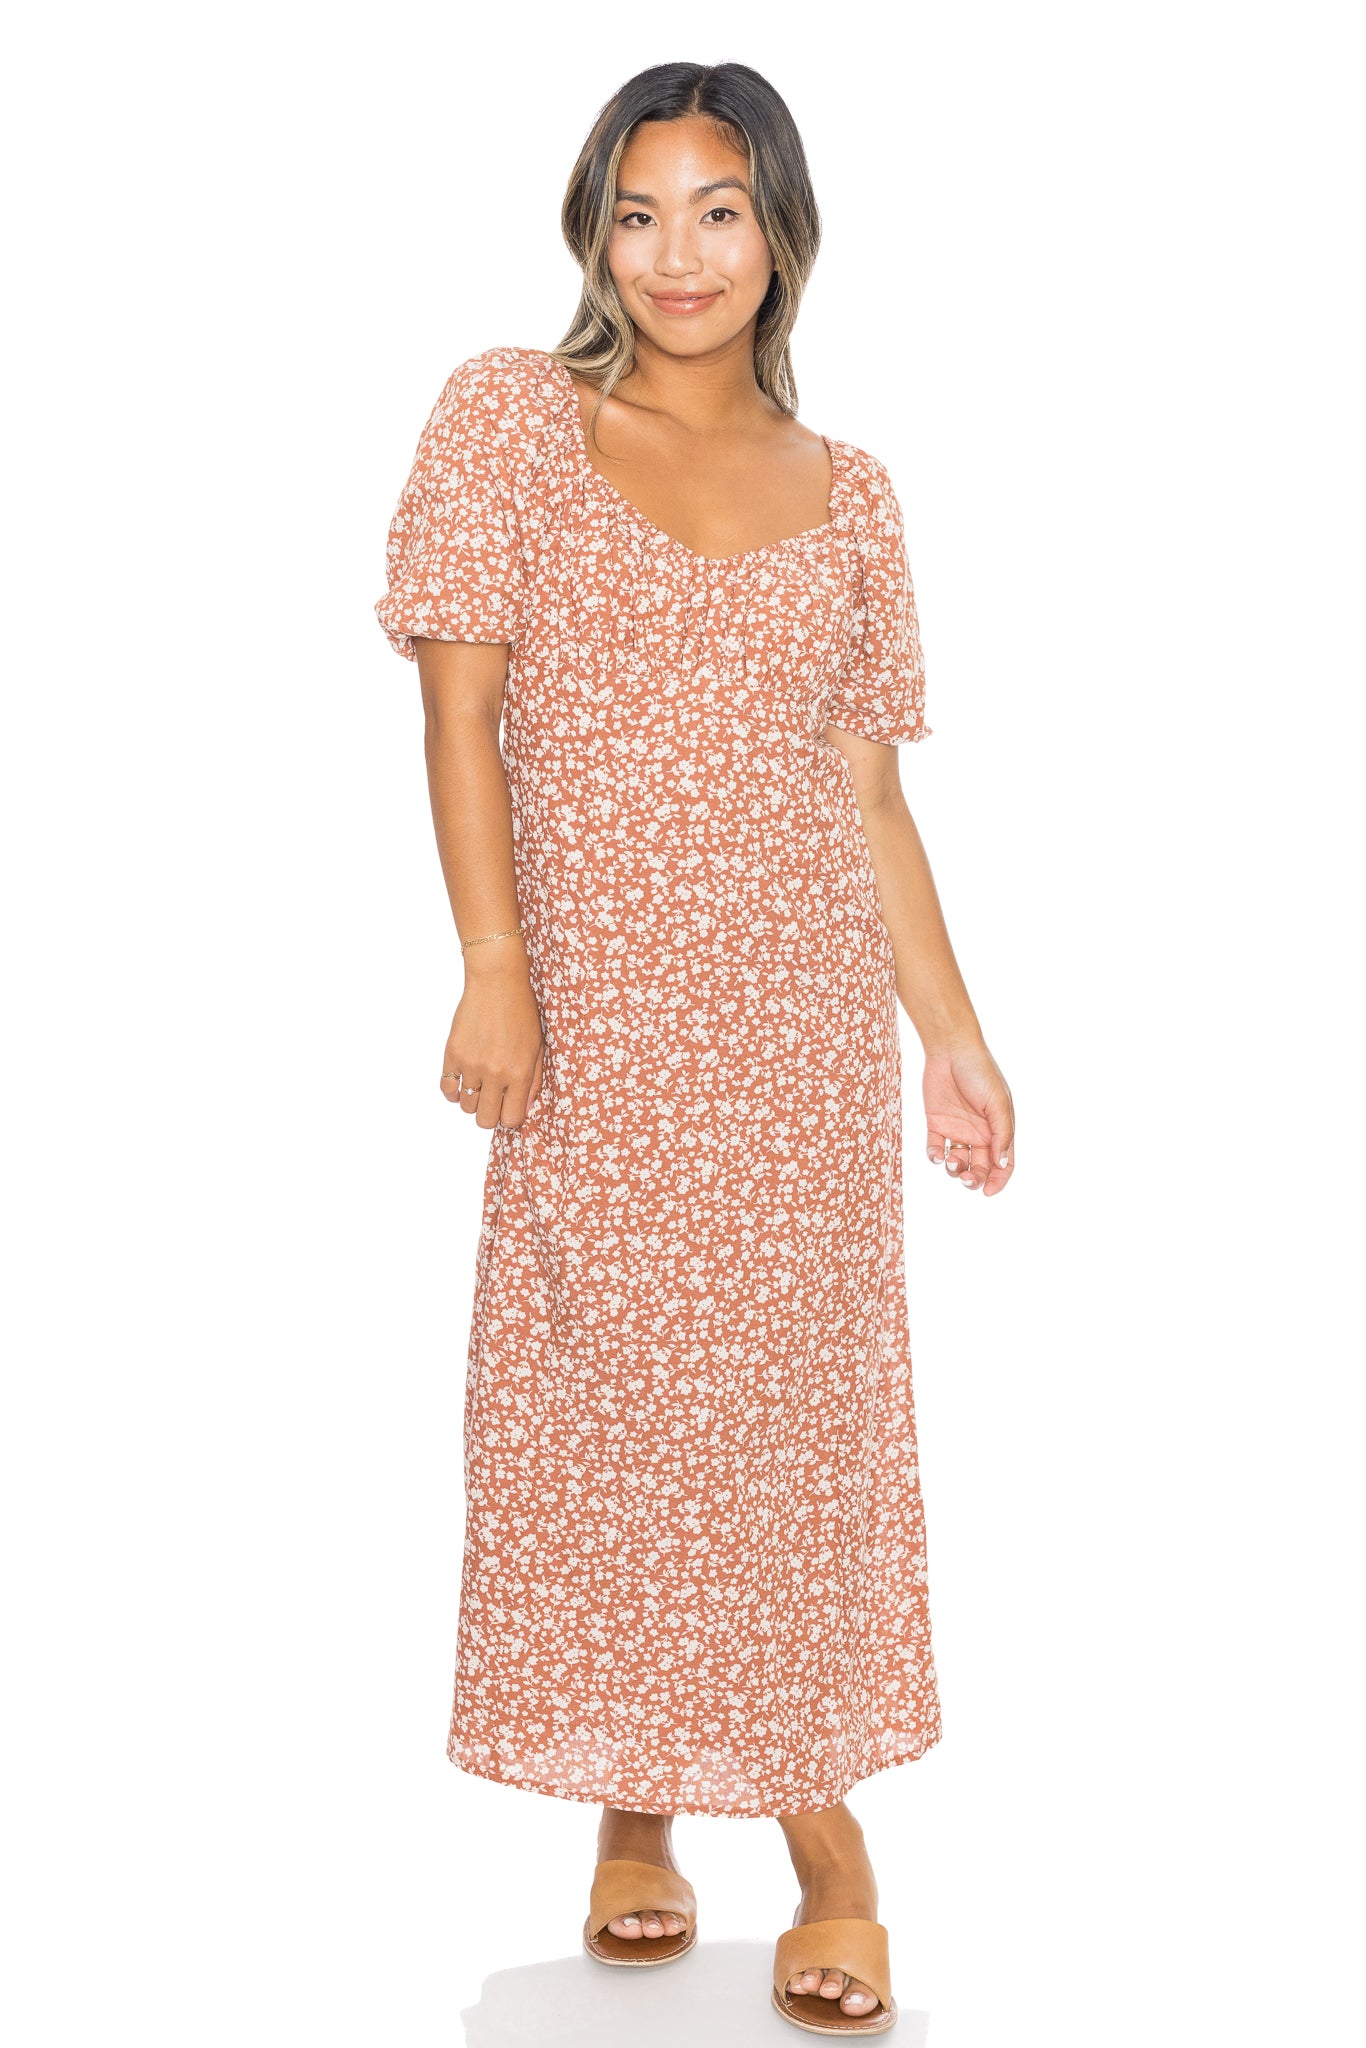 Kiera Floral Midi Dress by Z Supply